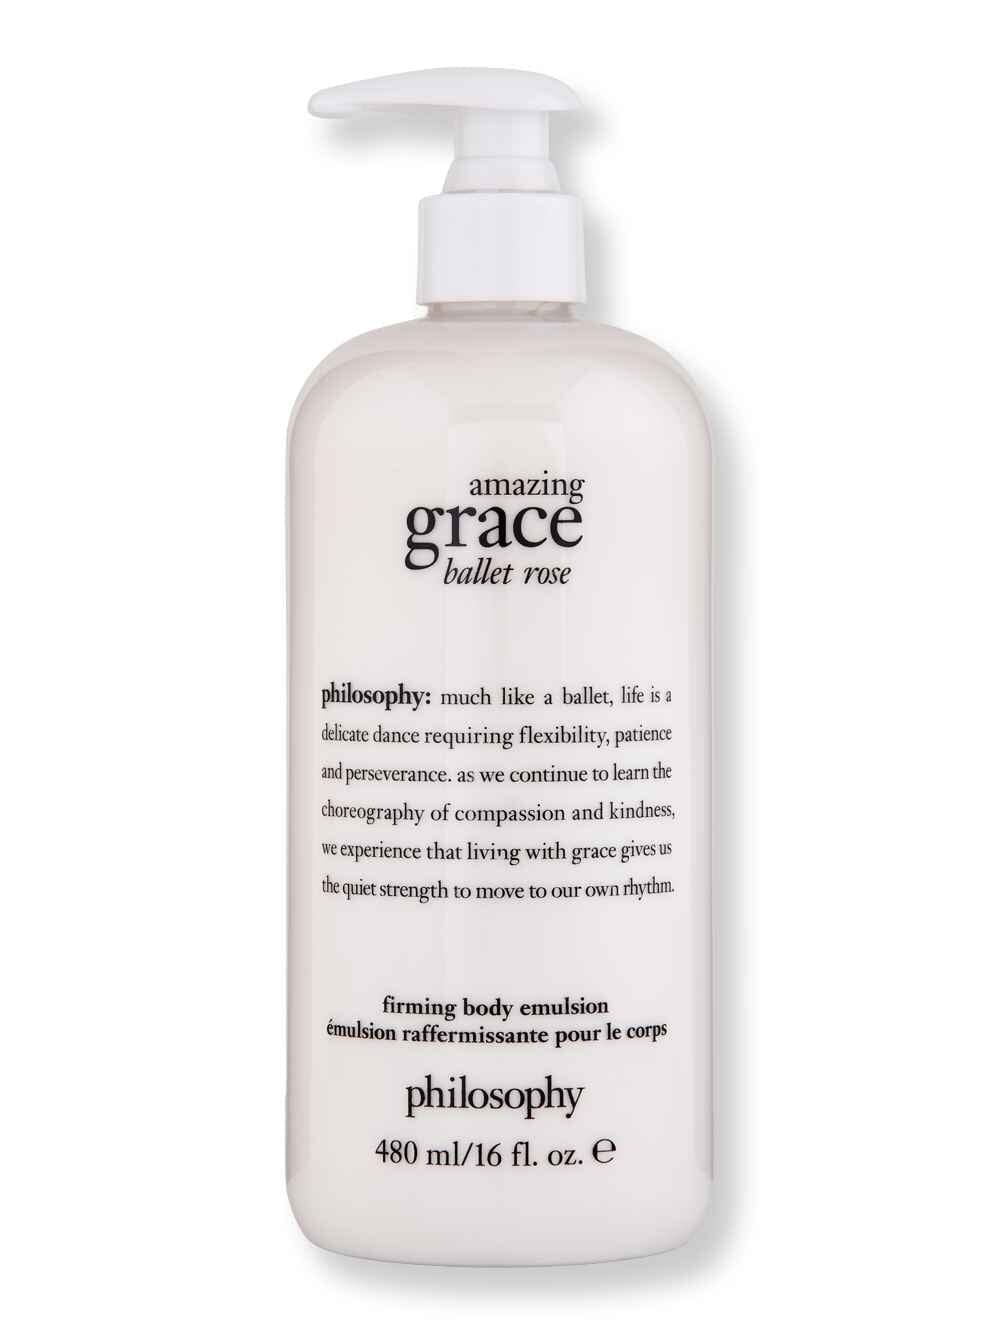 Philosophy Philosophy Amazing Grace Ballet Rose Firming Body Emulsion 16 oz480 ml Body Lotions & Oils 